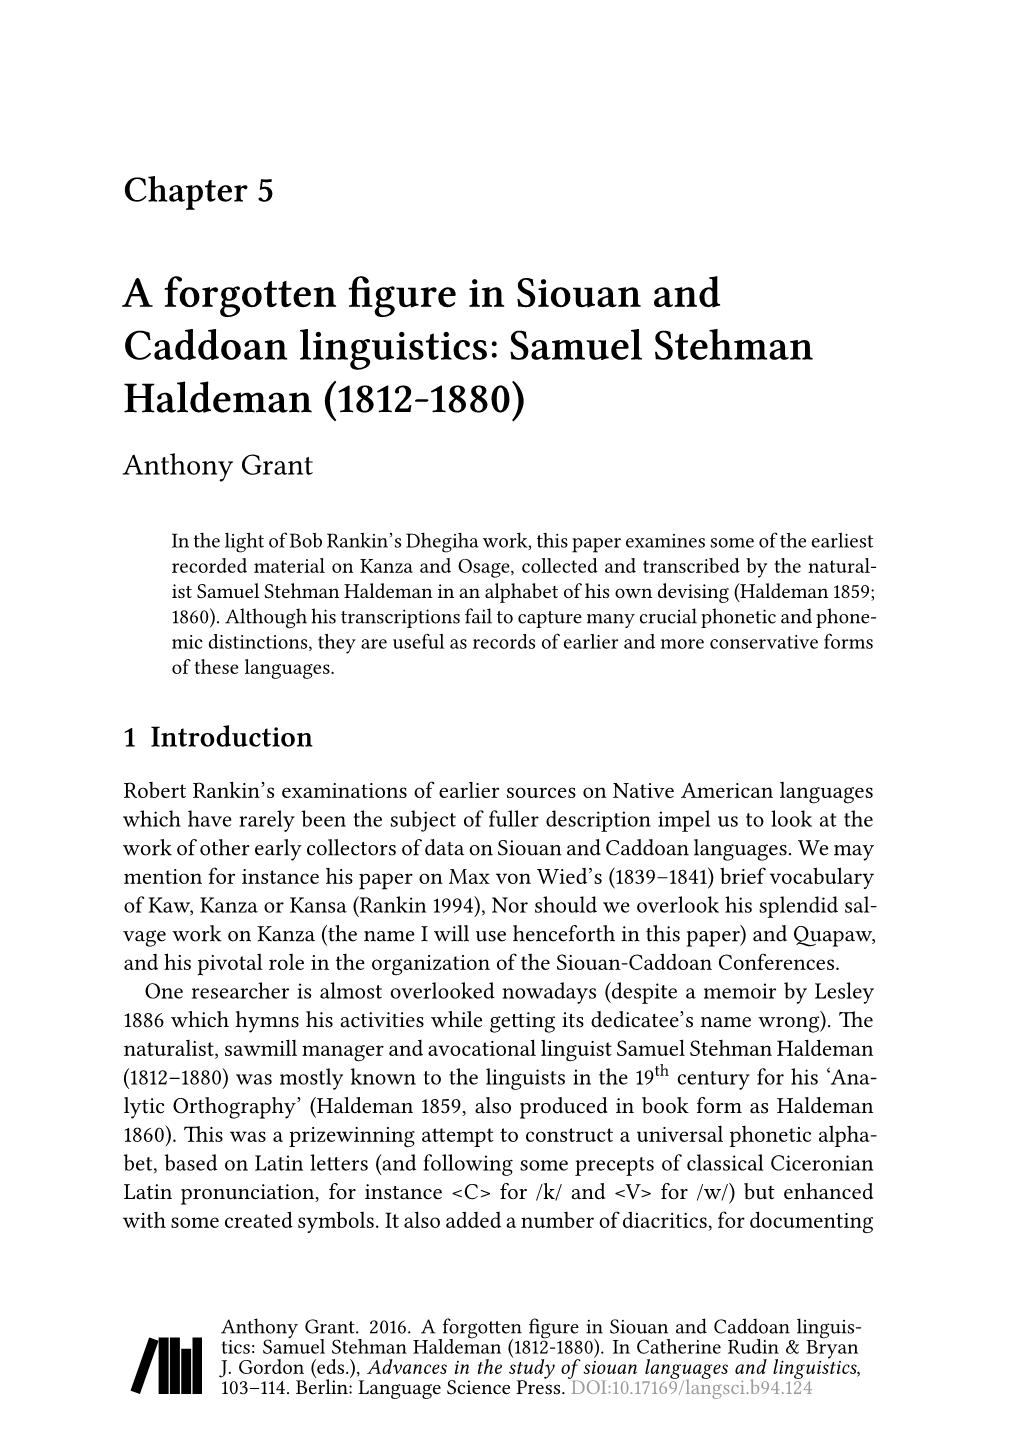 A Forgotten Figure in Siouan and Caddoan Linguistics: Samuel Stehman Haldeman (1812-1880) Anthony Grant